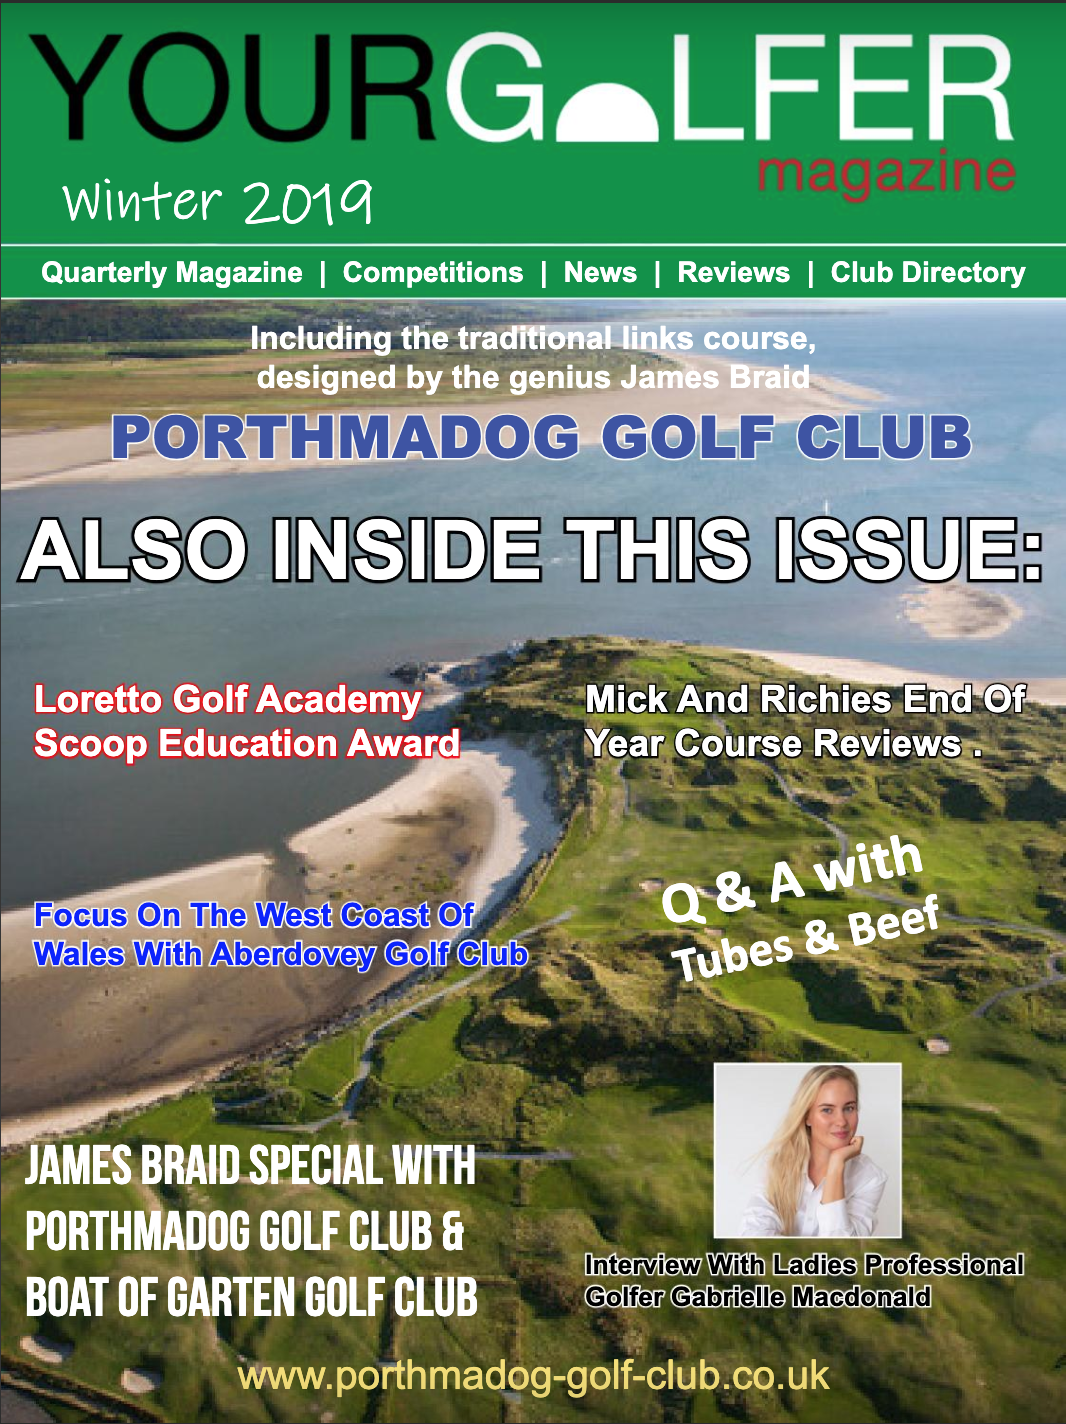 Winter 2019 Edition of Your Golfer Magazine